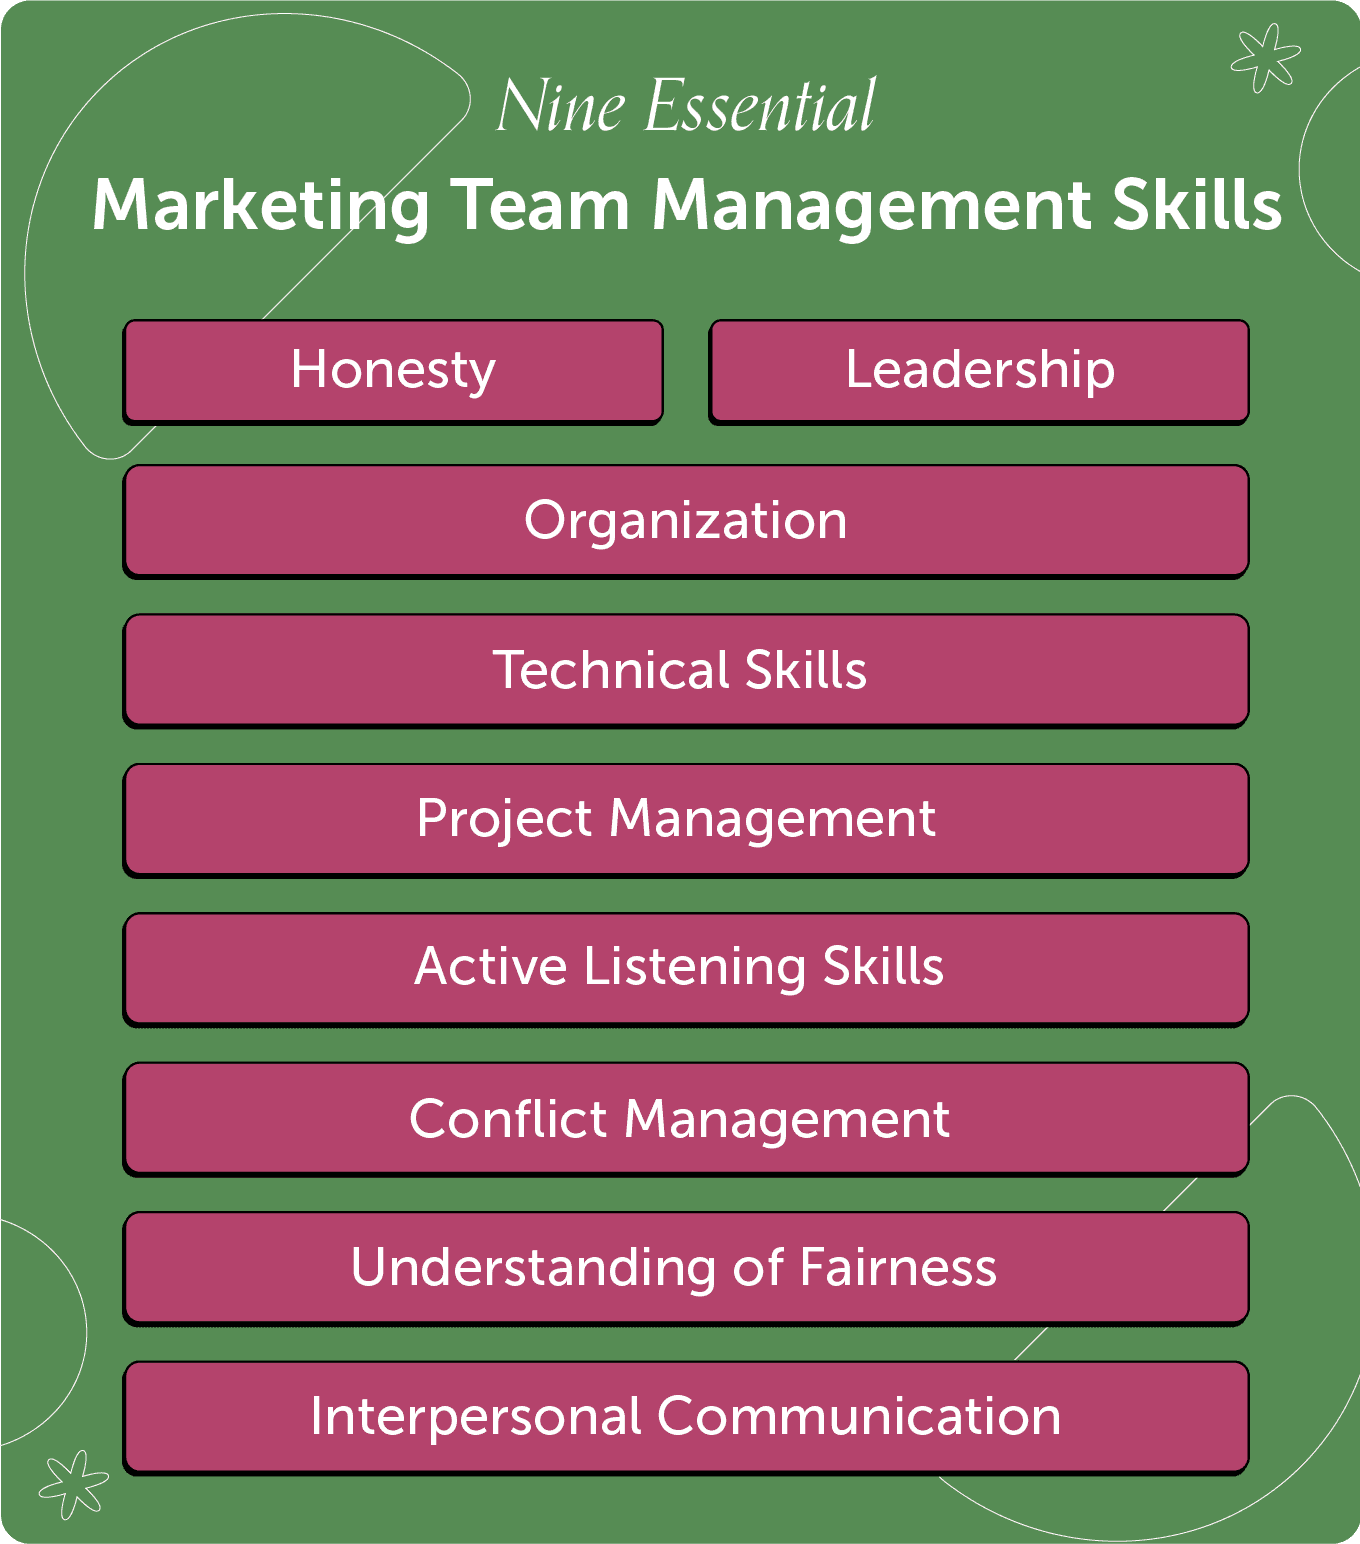 Nine essential marketing team management skills: organization, technical skills, project management, active listening skills, conflict management, understanding of fairness, and interpersonal communication